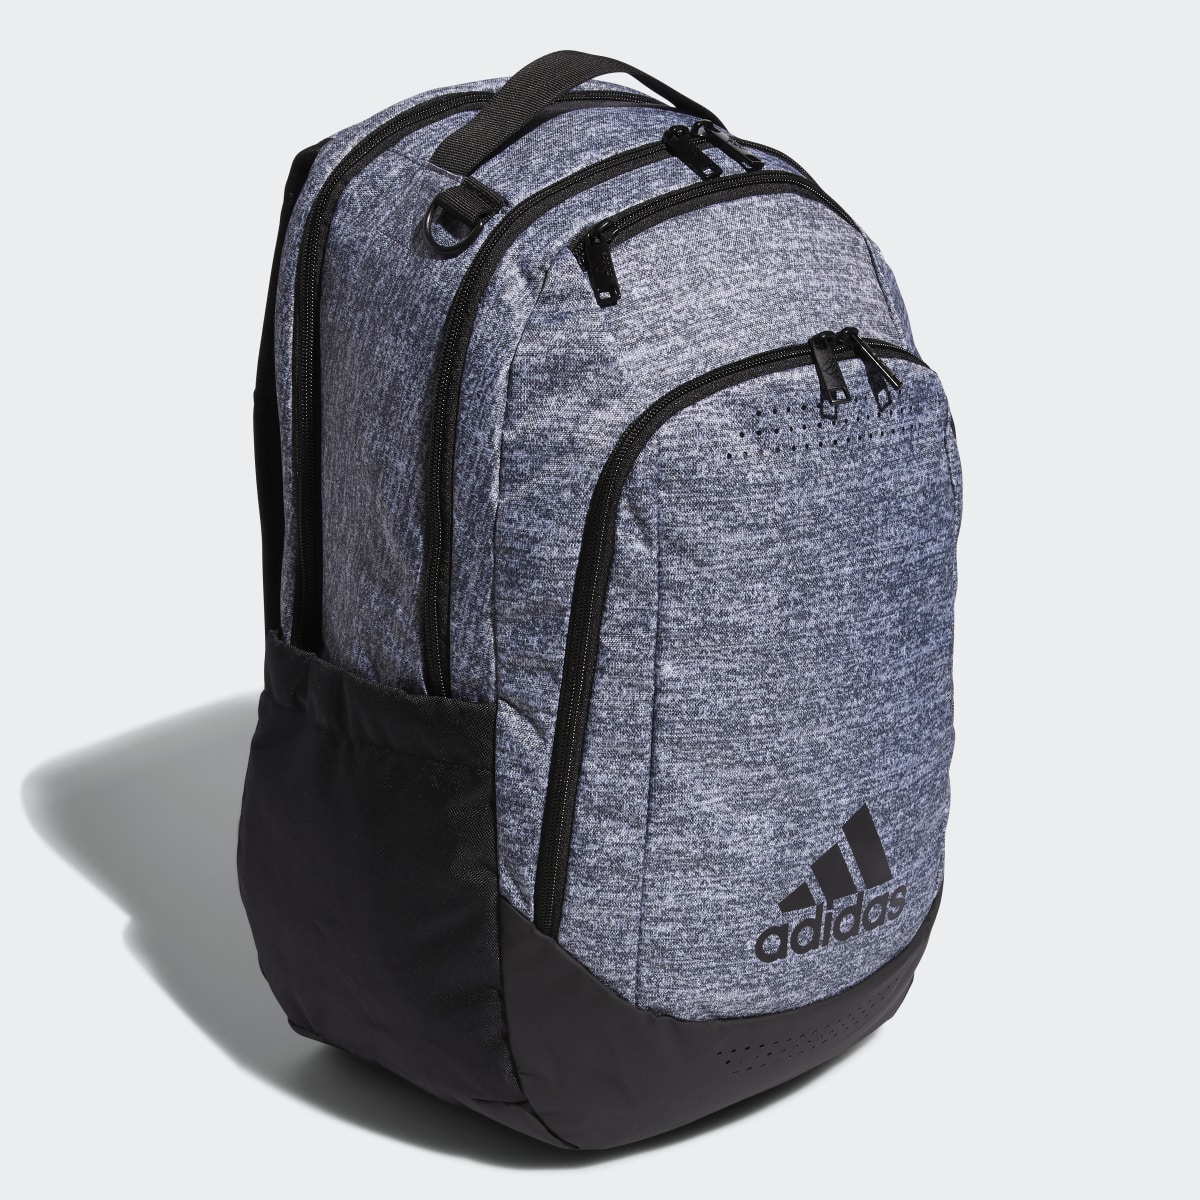 Adidas Defender Backpack. 4